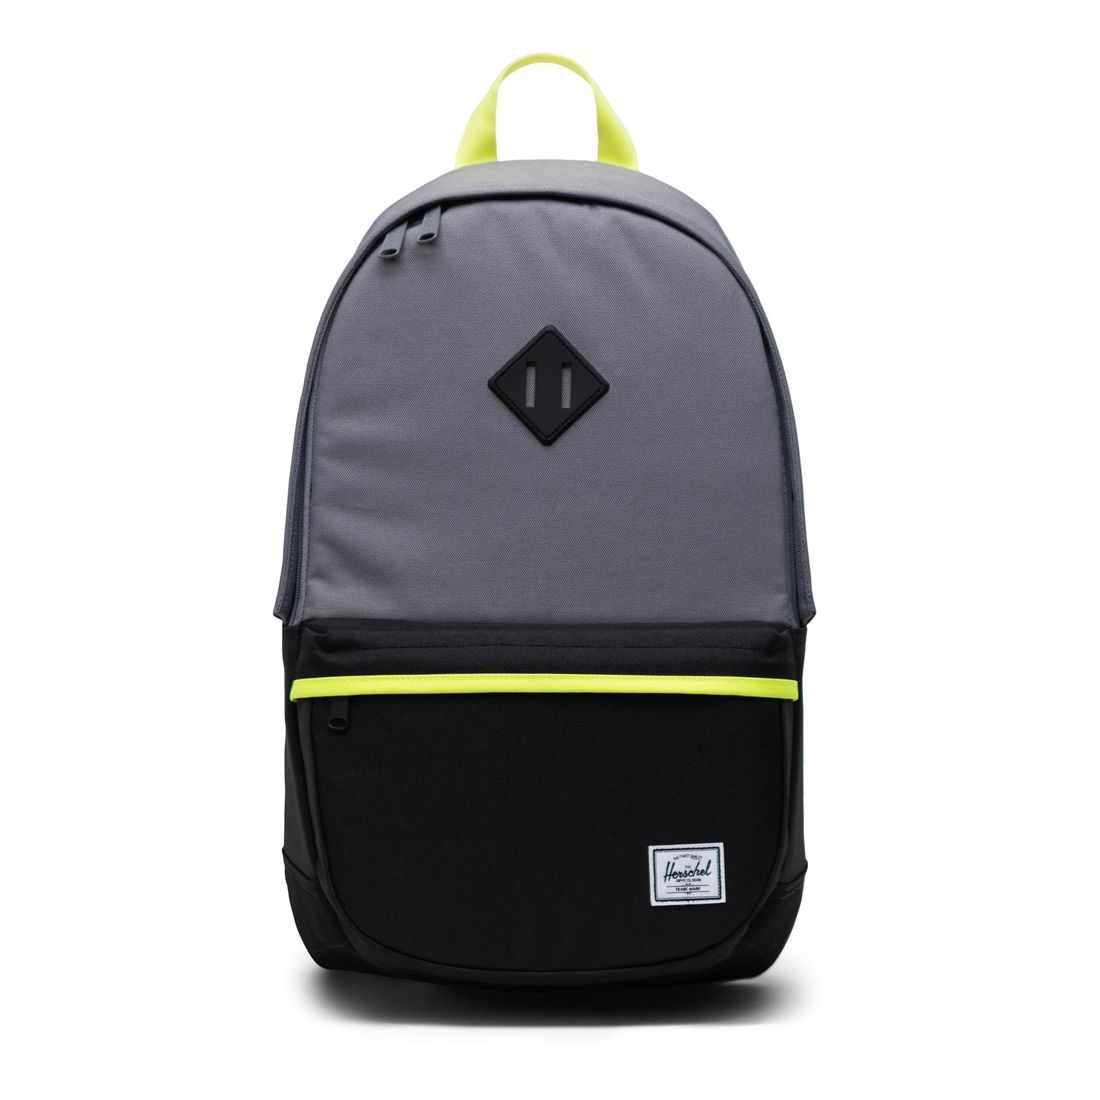 Herschel Heritage Pro Backpack Grey/Black/Safety Yellow